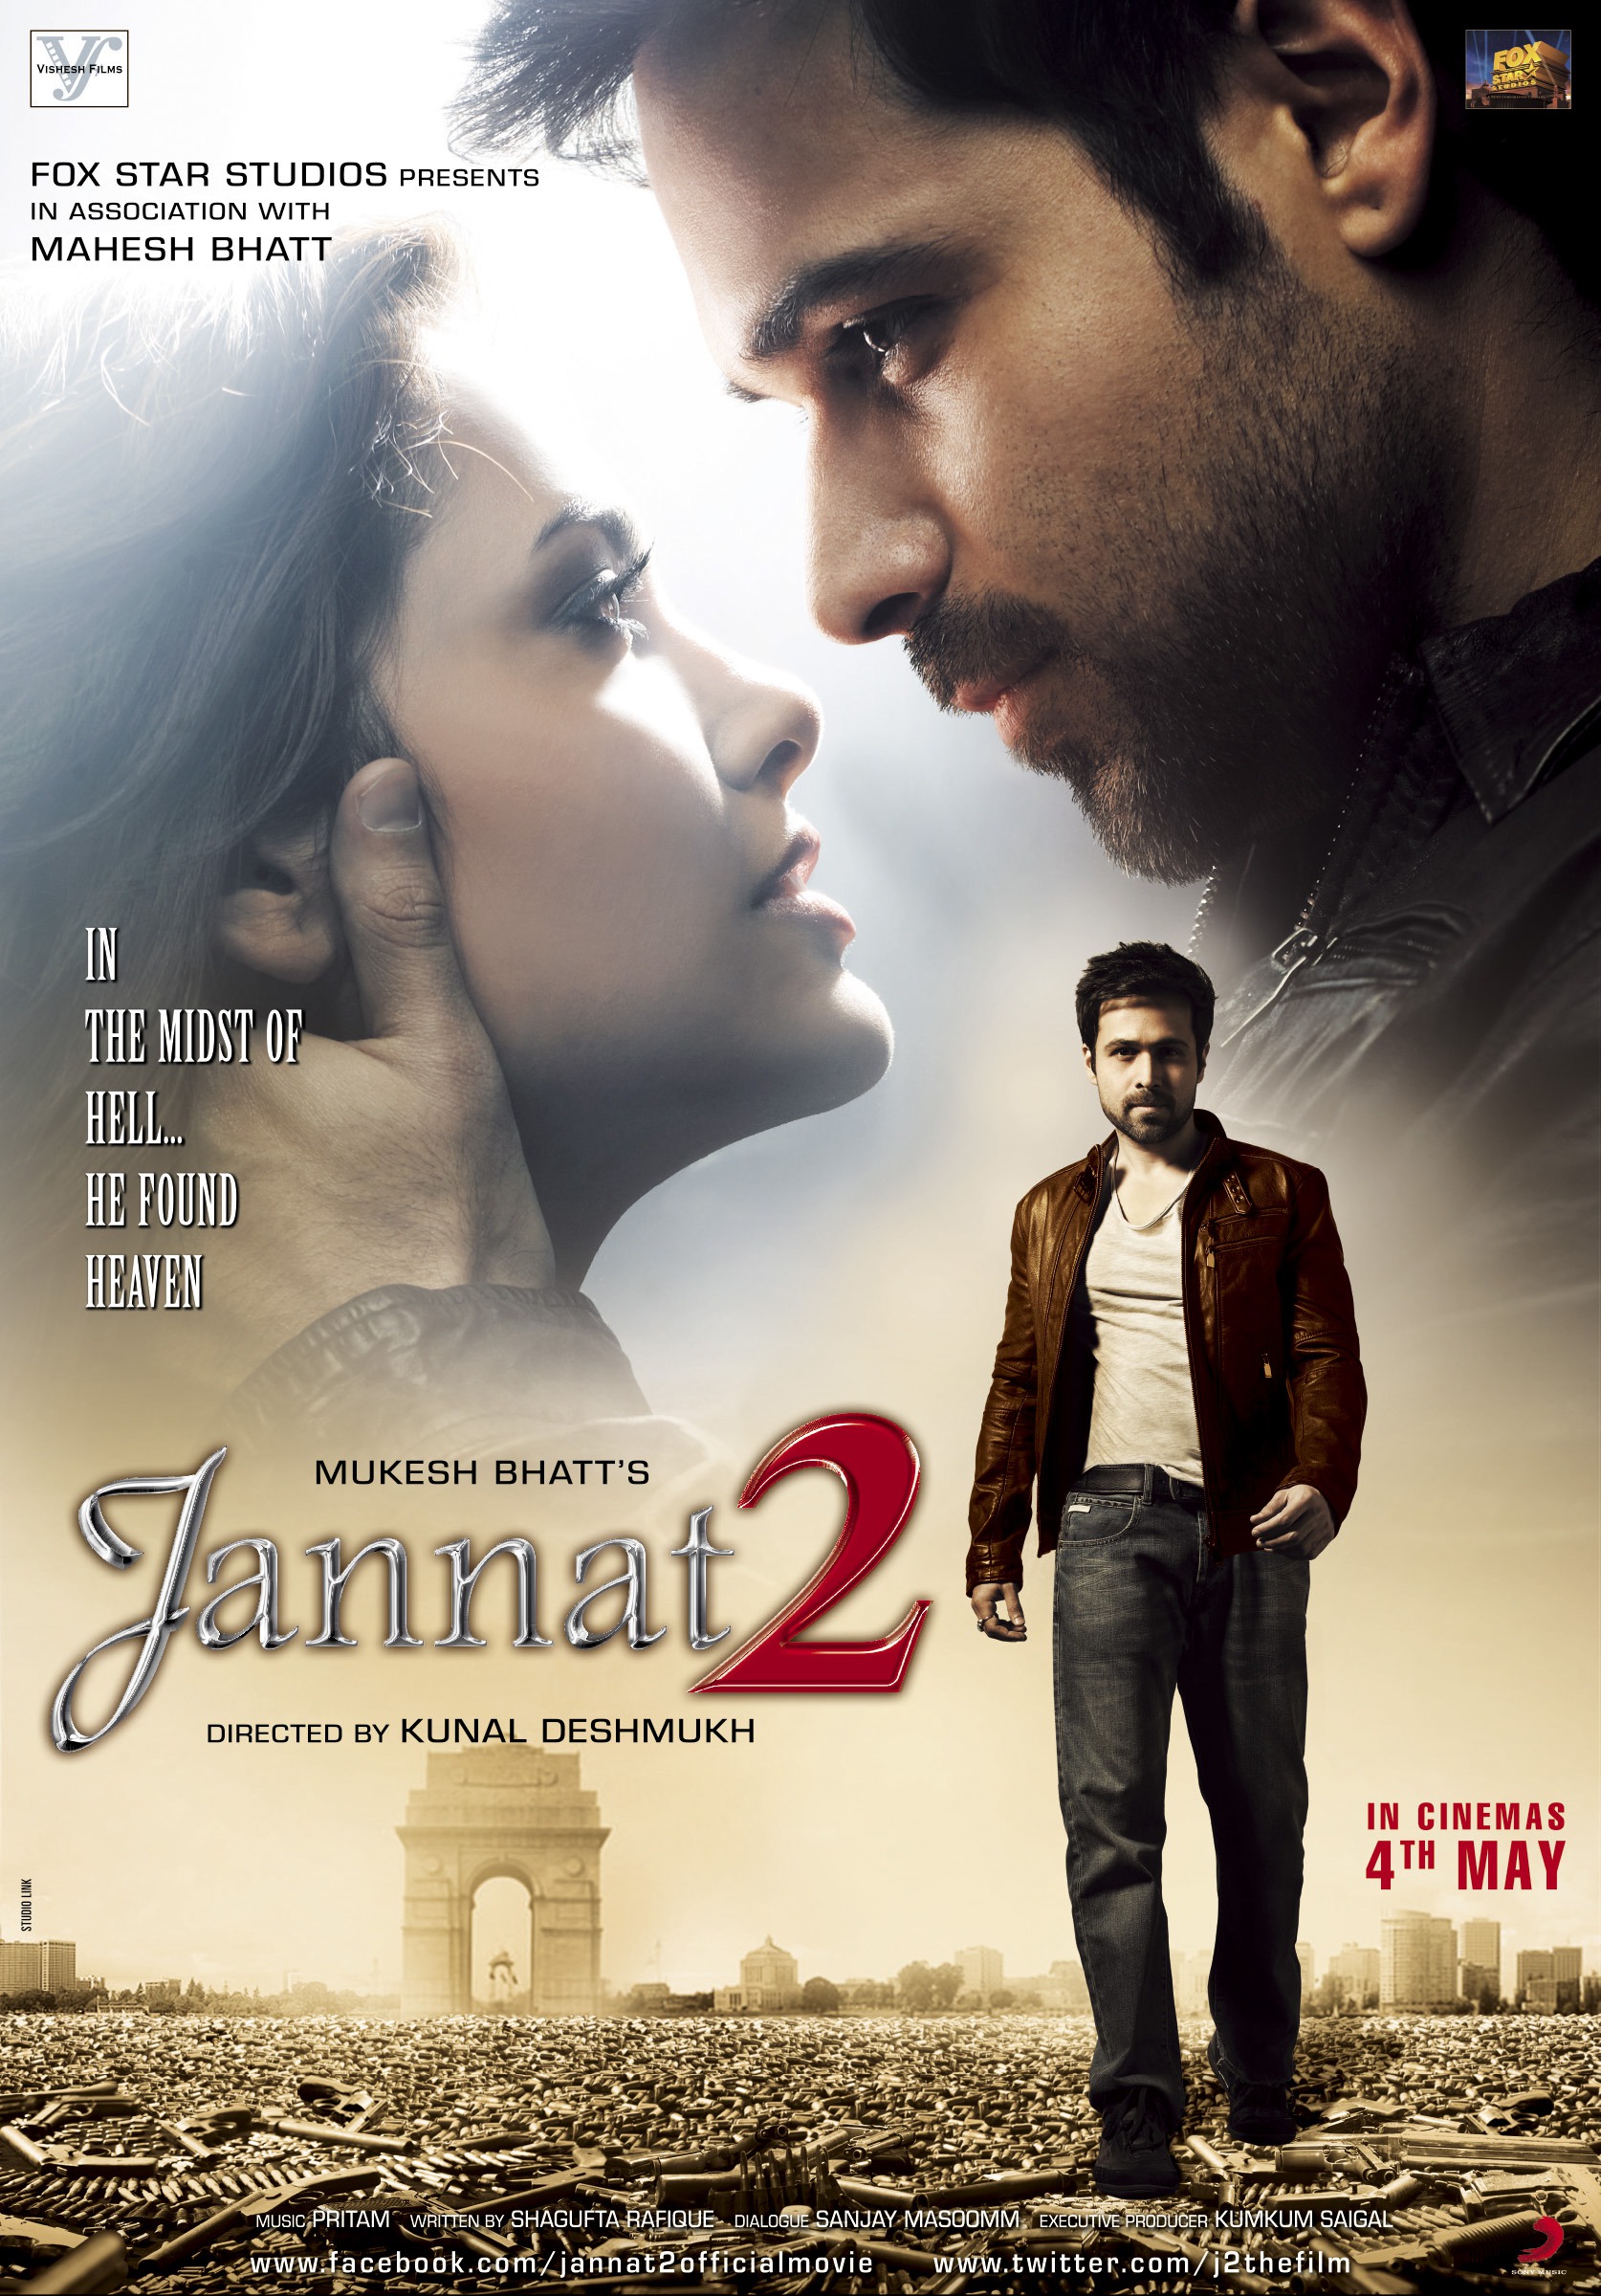 Mega Sized Movie Poster Image for Jannat 2 (#2 of 2)